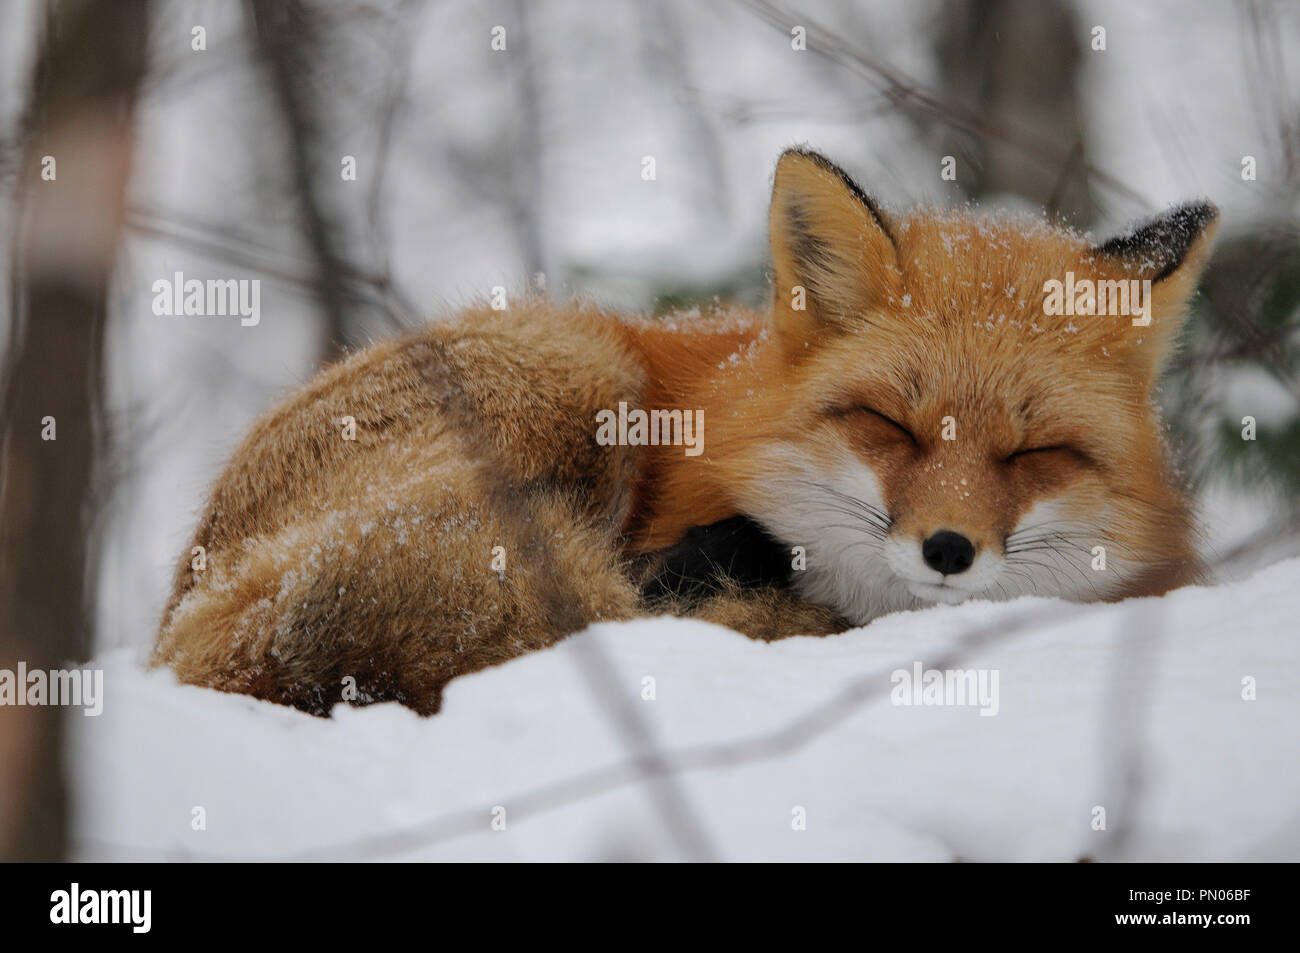 Fox sleeping on the snow in the winter season. Stock Photo